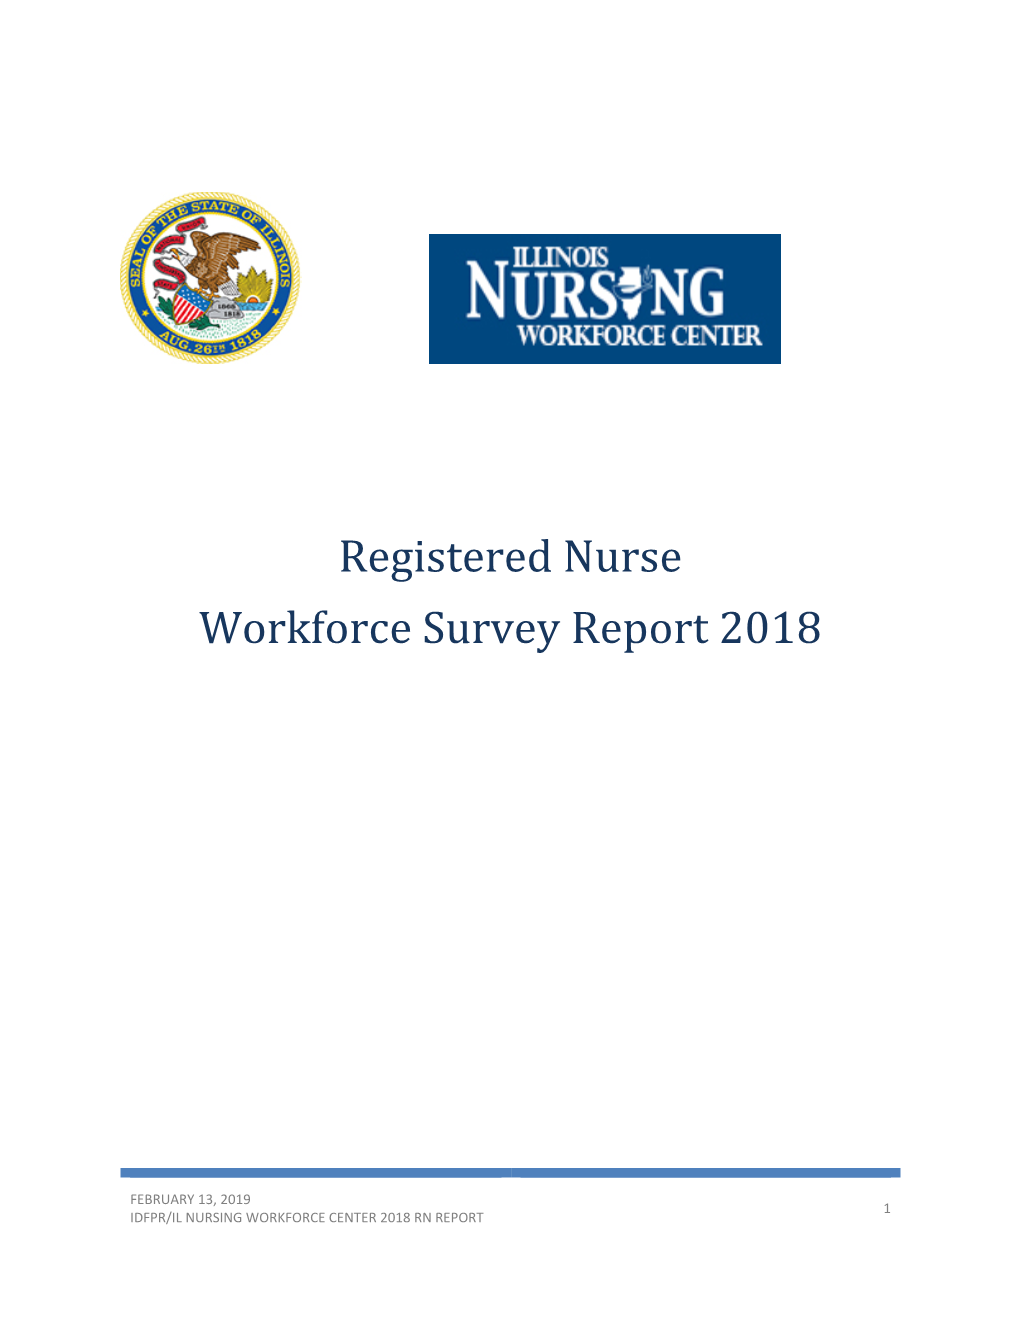 Registered Nurse Workforce Survey Report 2018